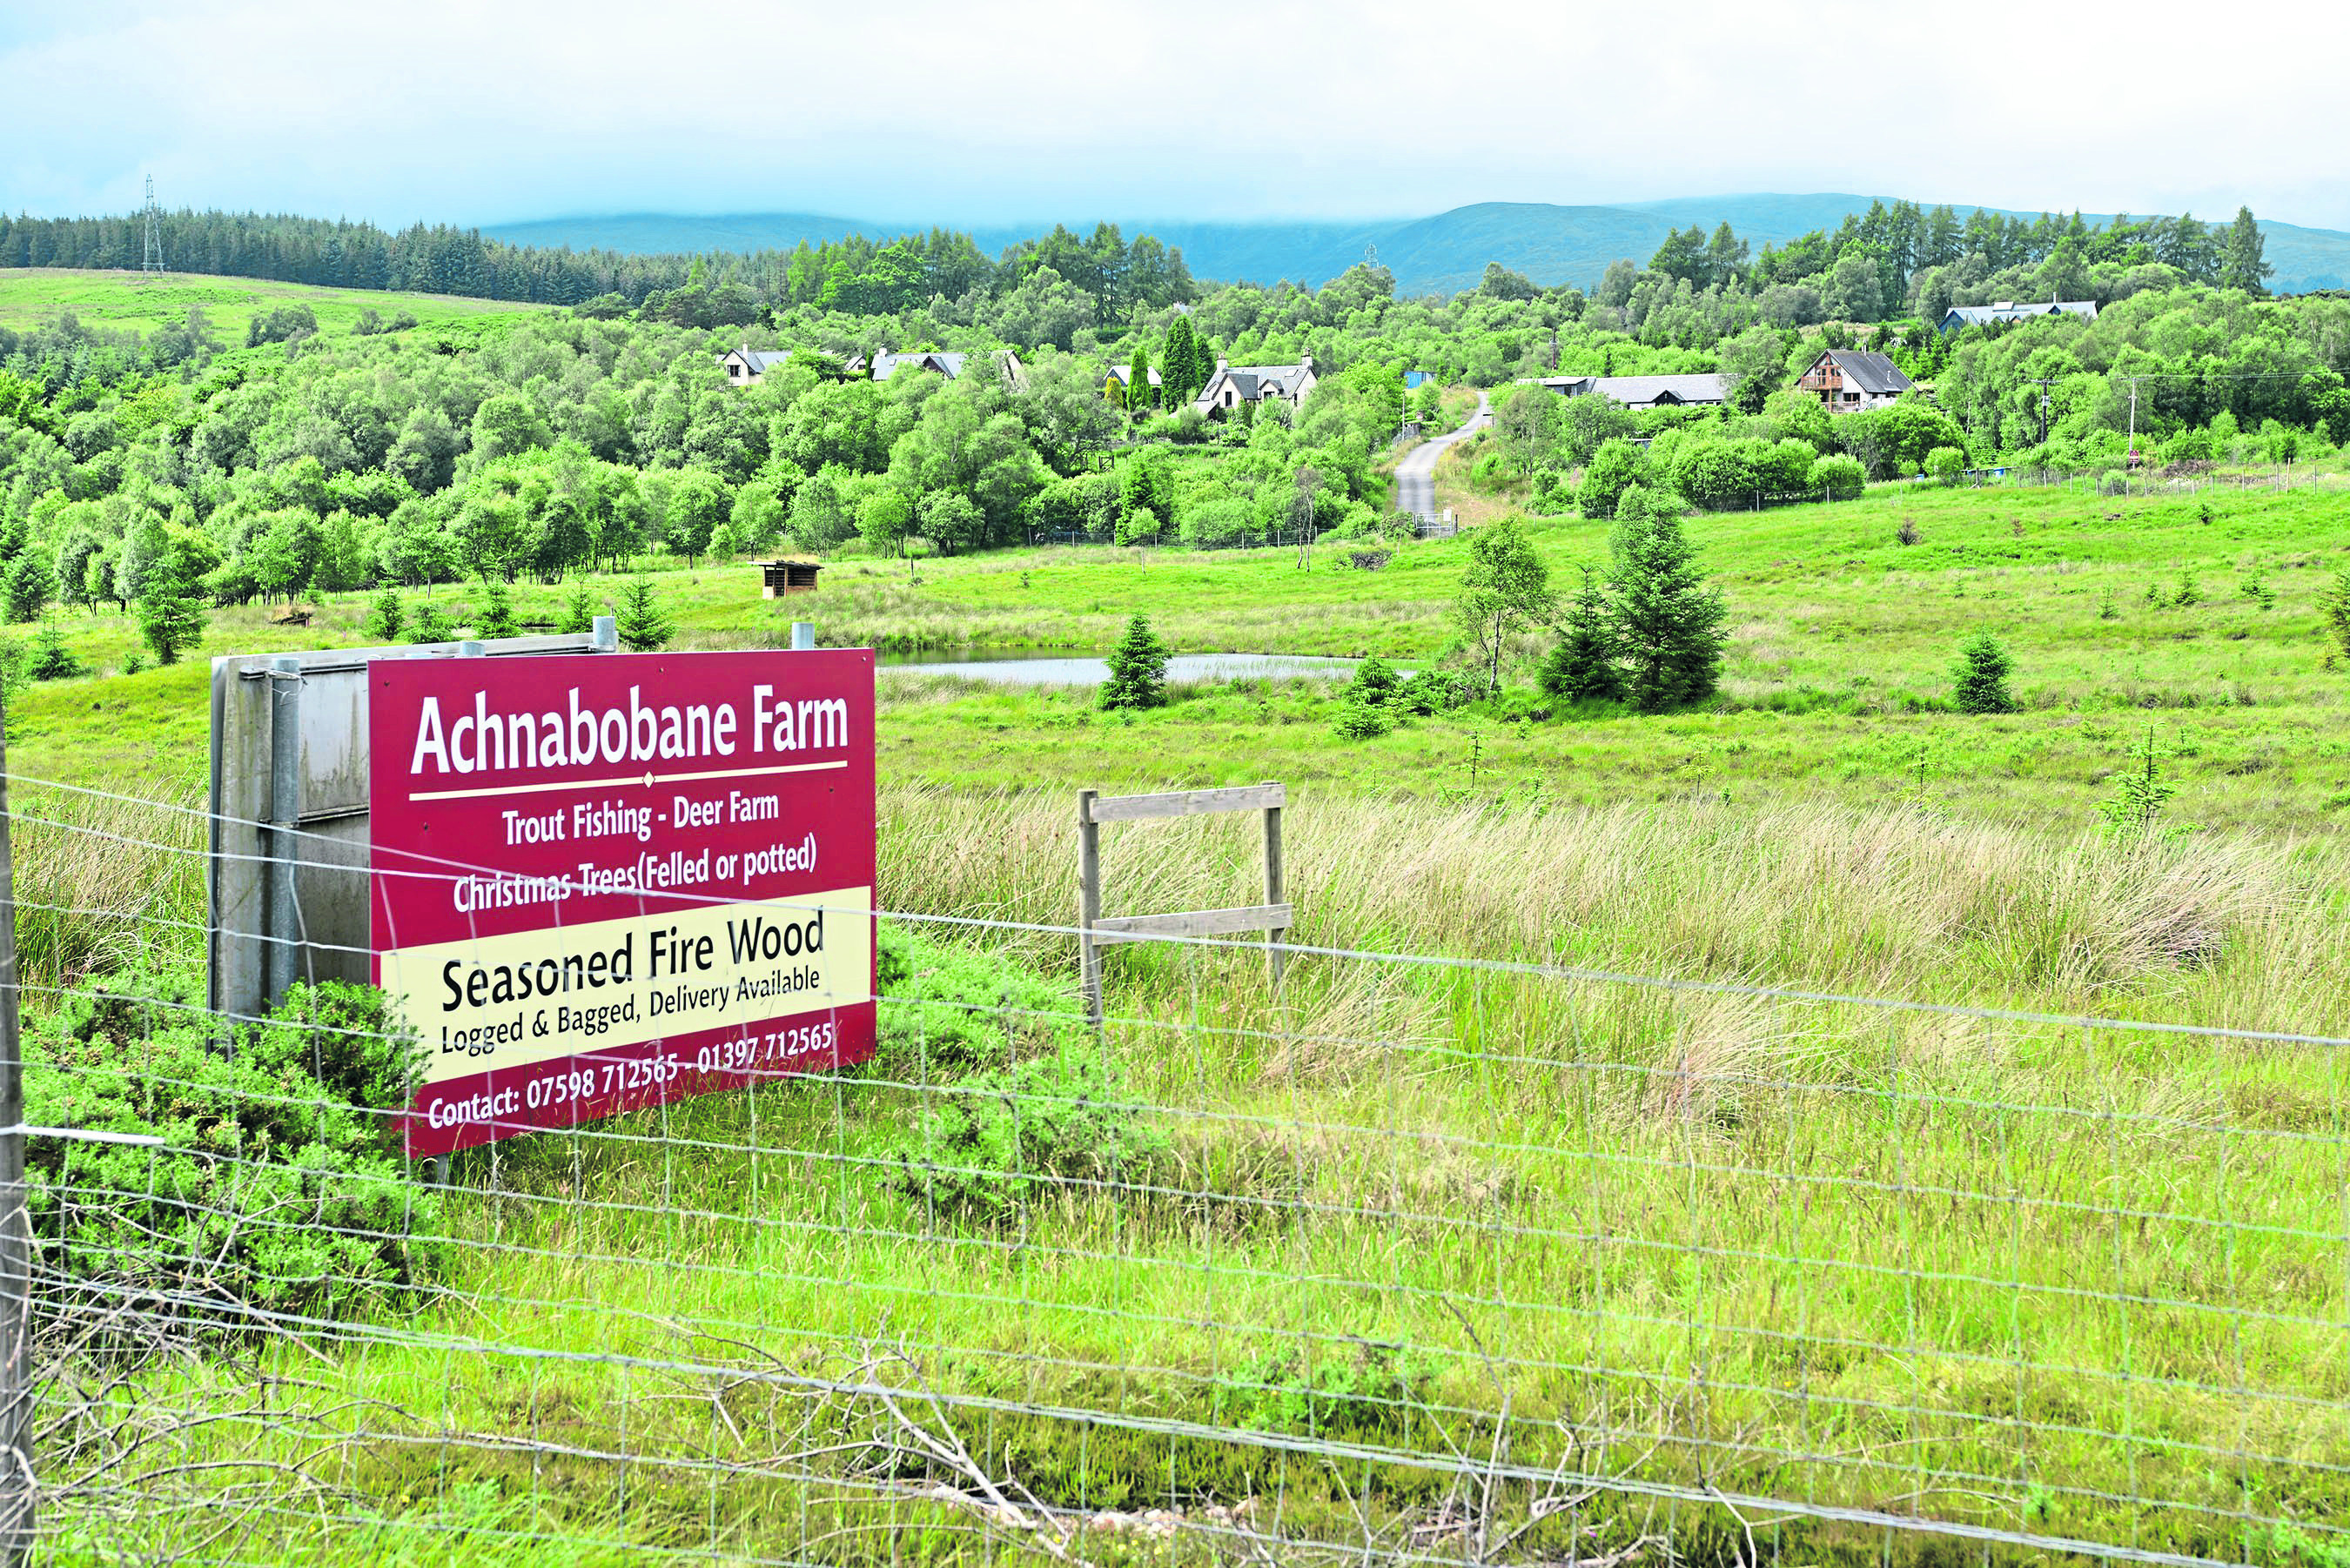 Achnabobane Farm where proposals have been put forward for extensive development.